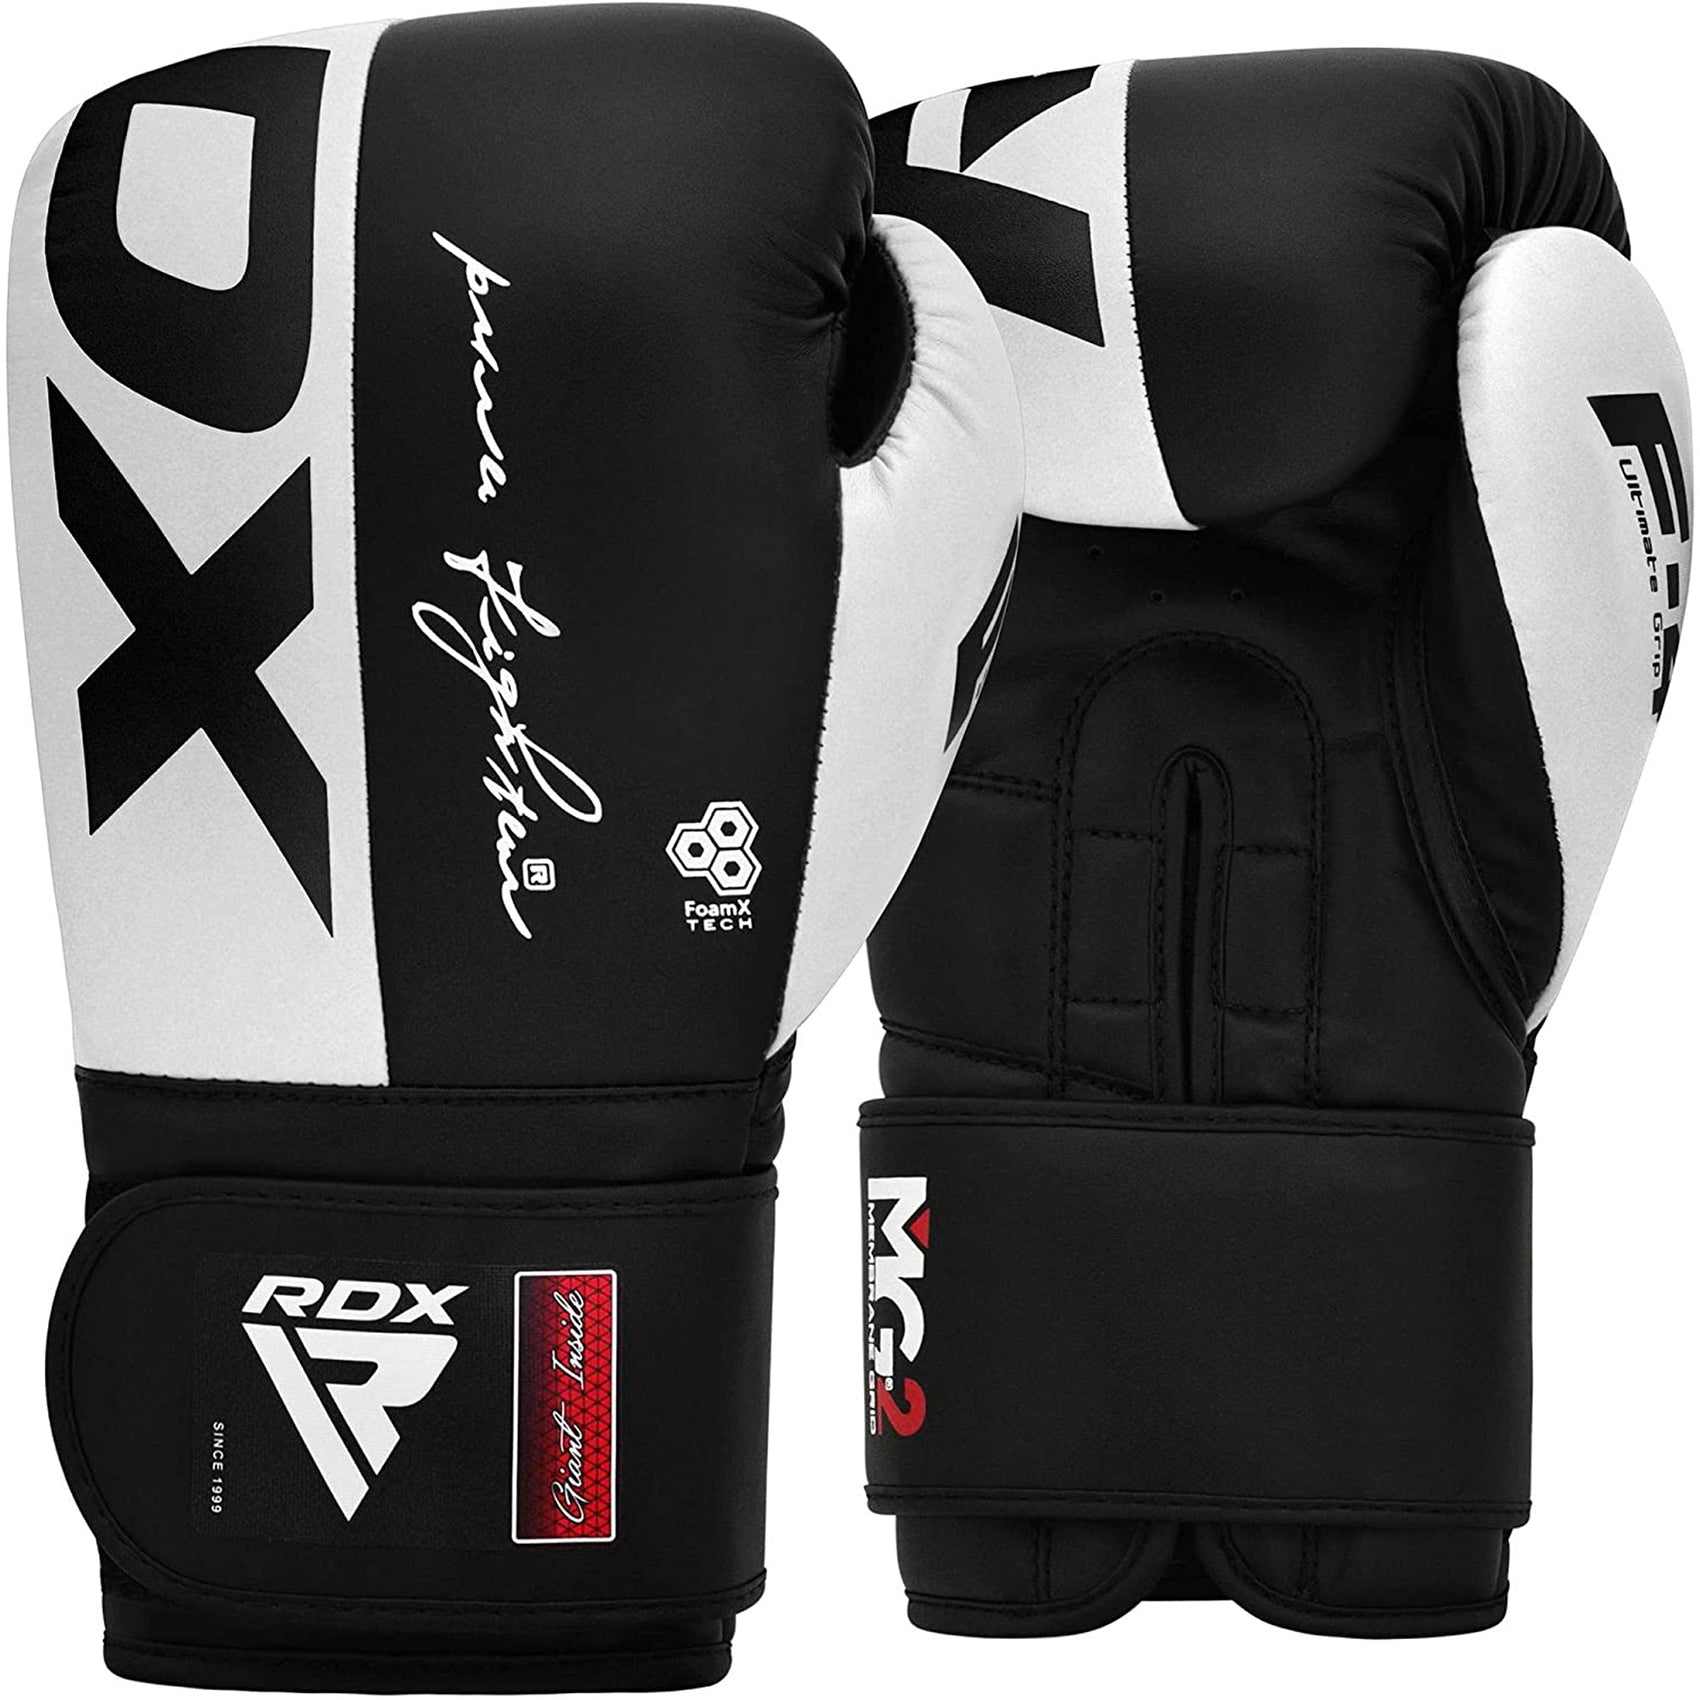 RDX REX F4 MMA, BJJ, Muay Thai, Kickboxing, Training Boxing Gloves - WHITE/BLACK - 10oz - Pro-Distributing